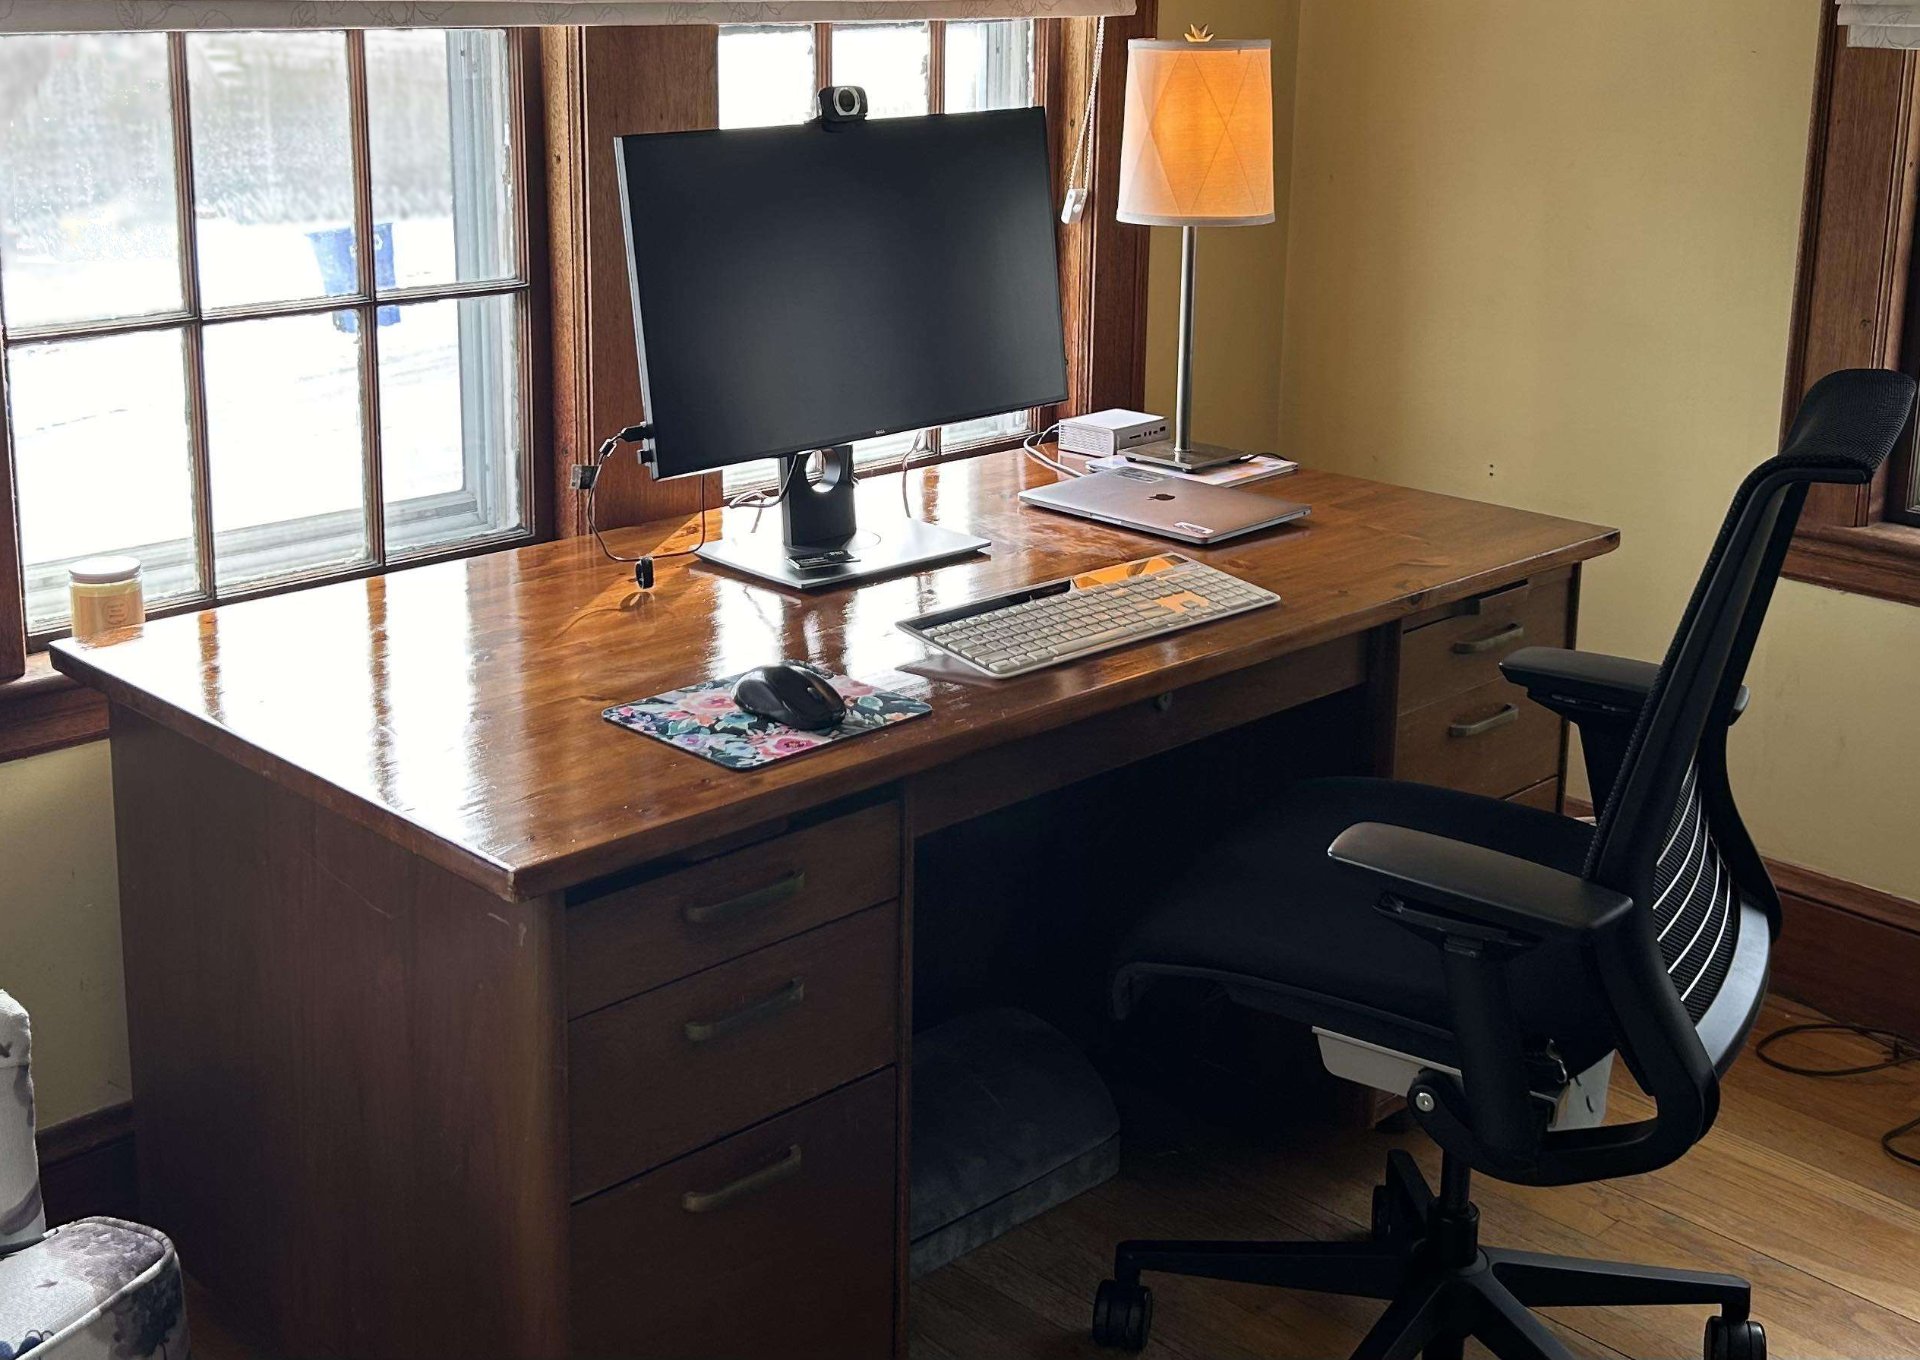 the finished desk